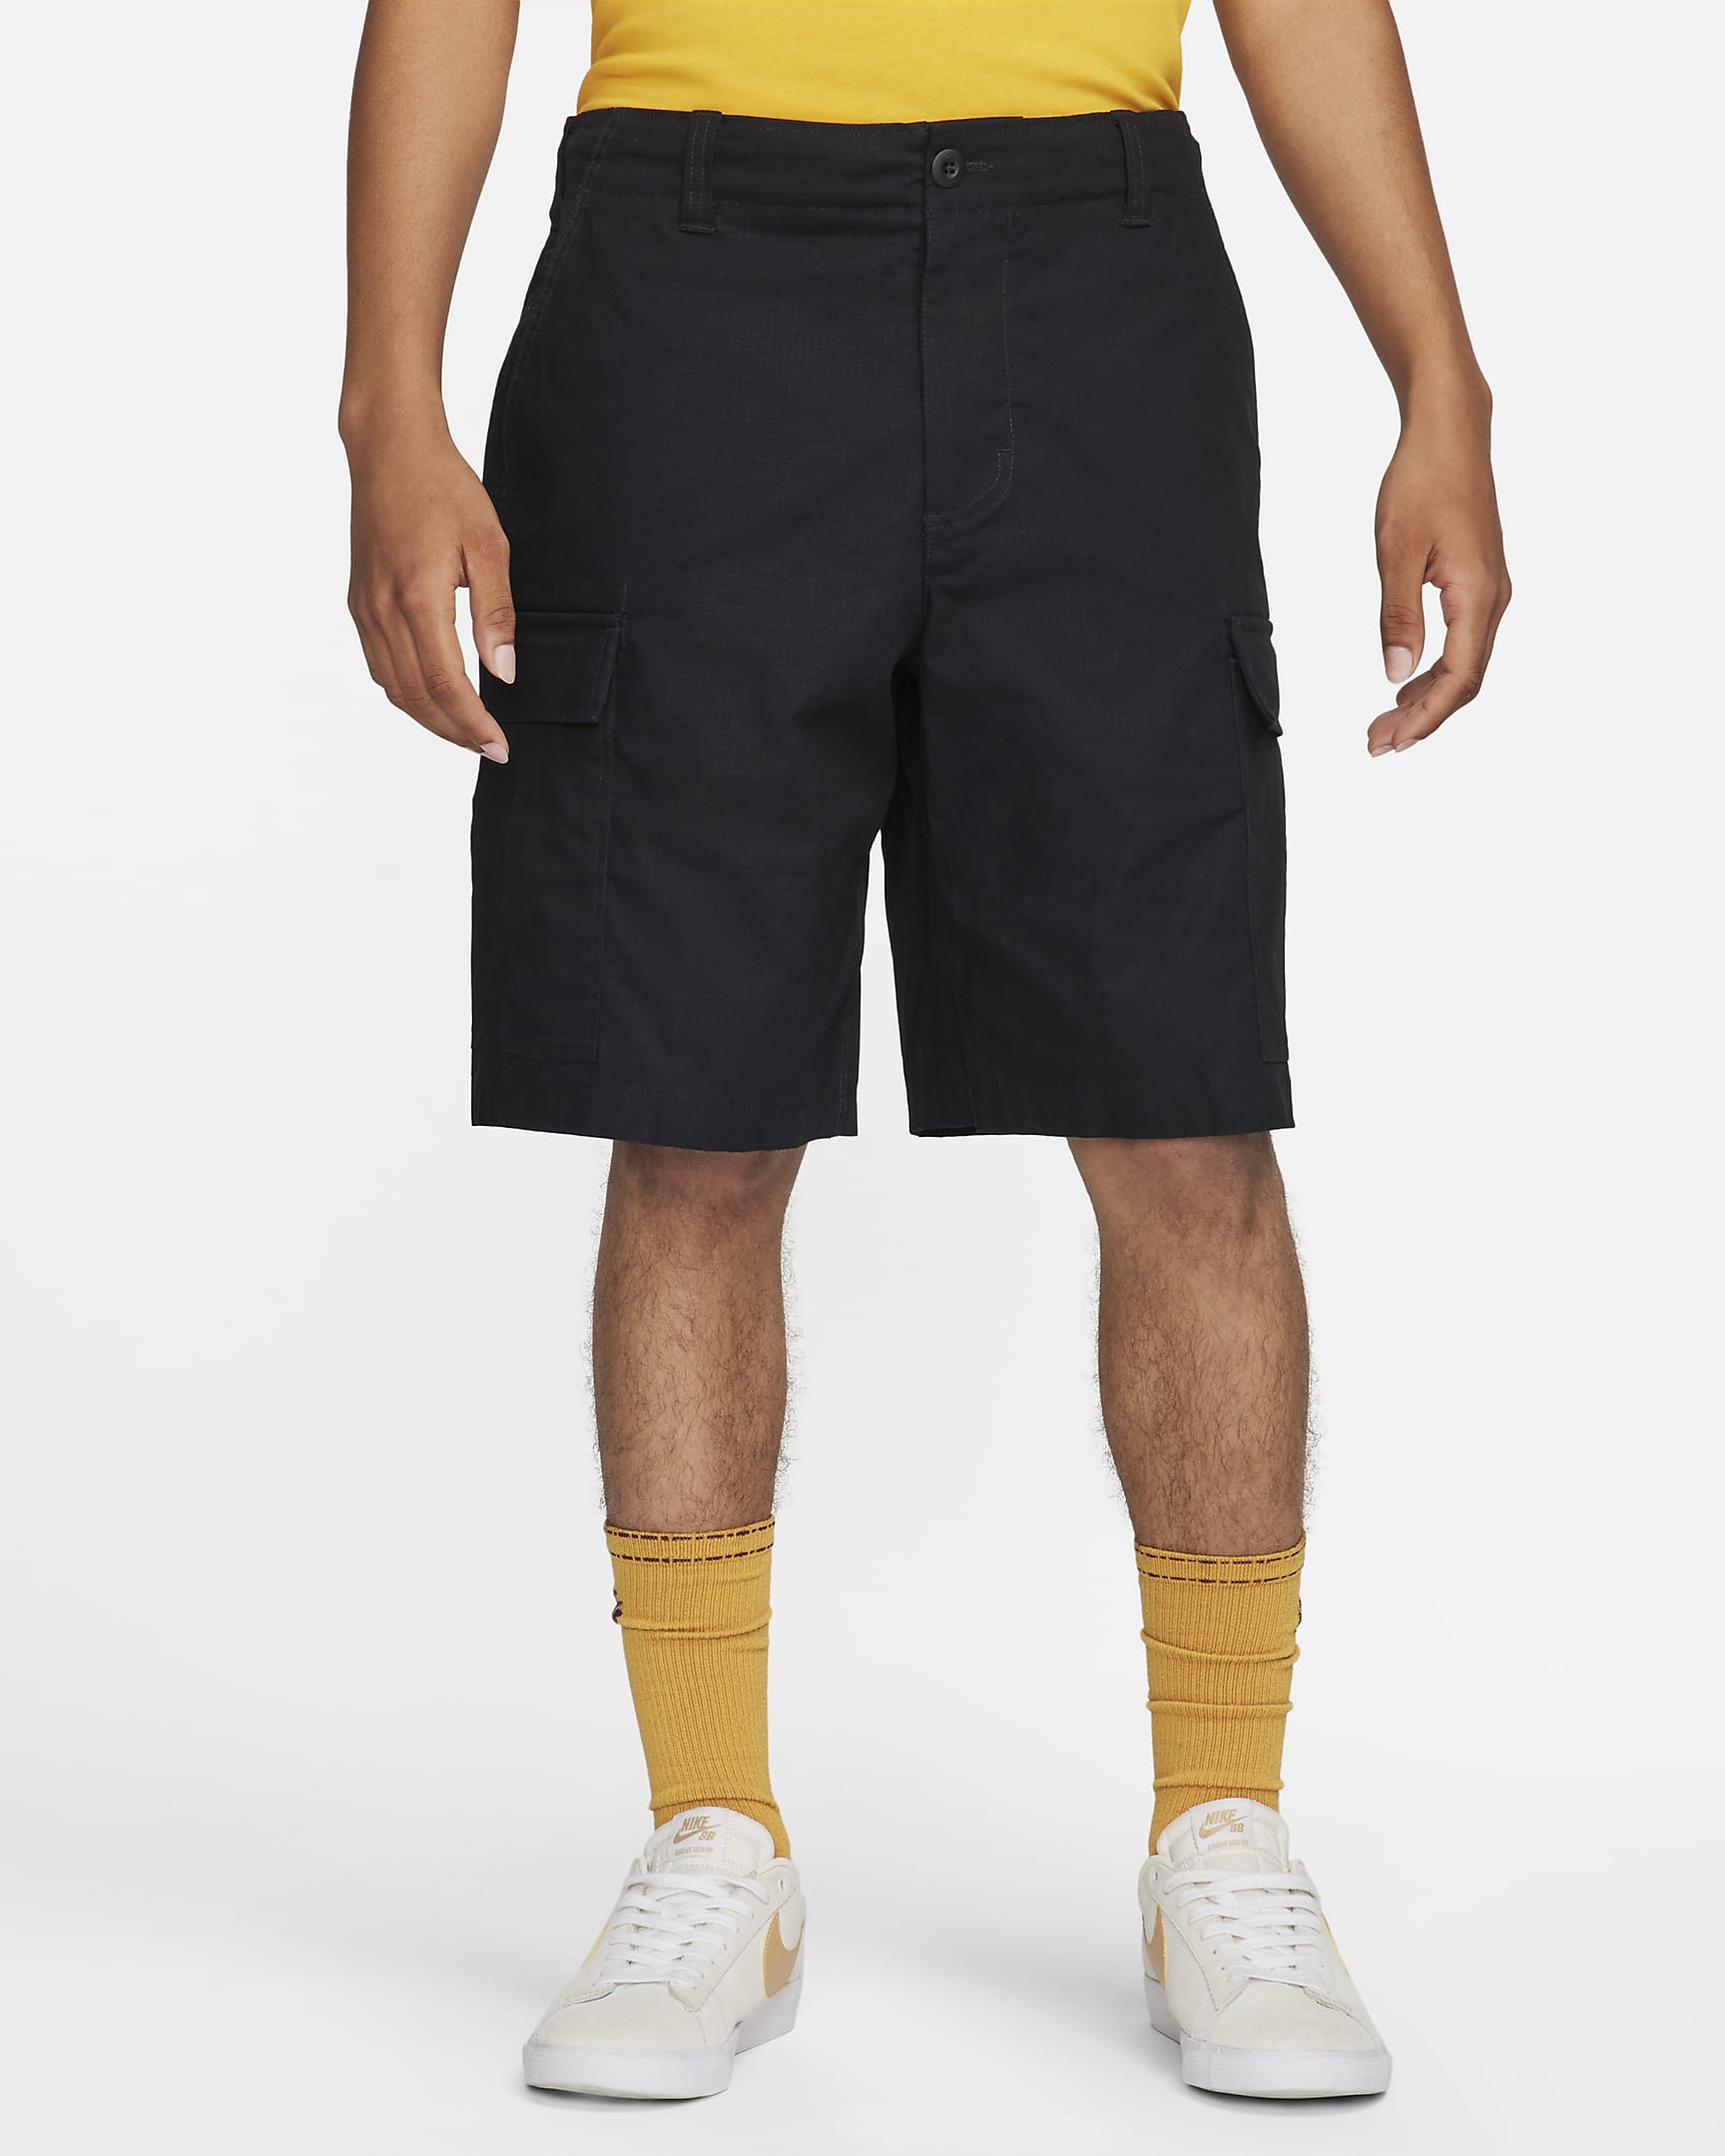 Nike SB Kearny Men's Cargo Skate Shorts. Nike AT